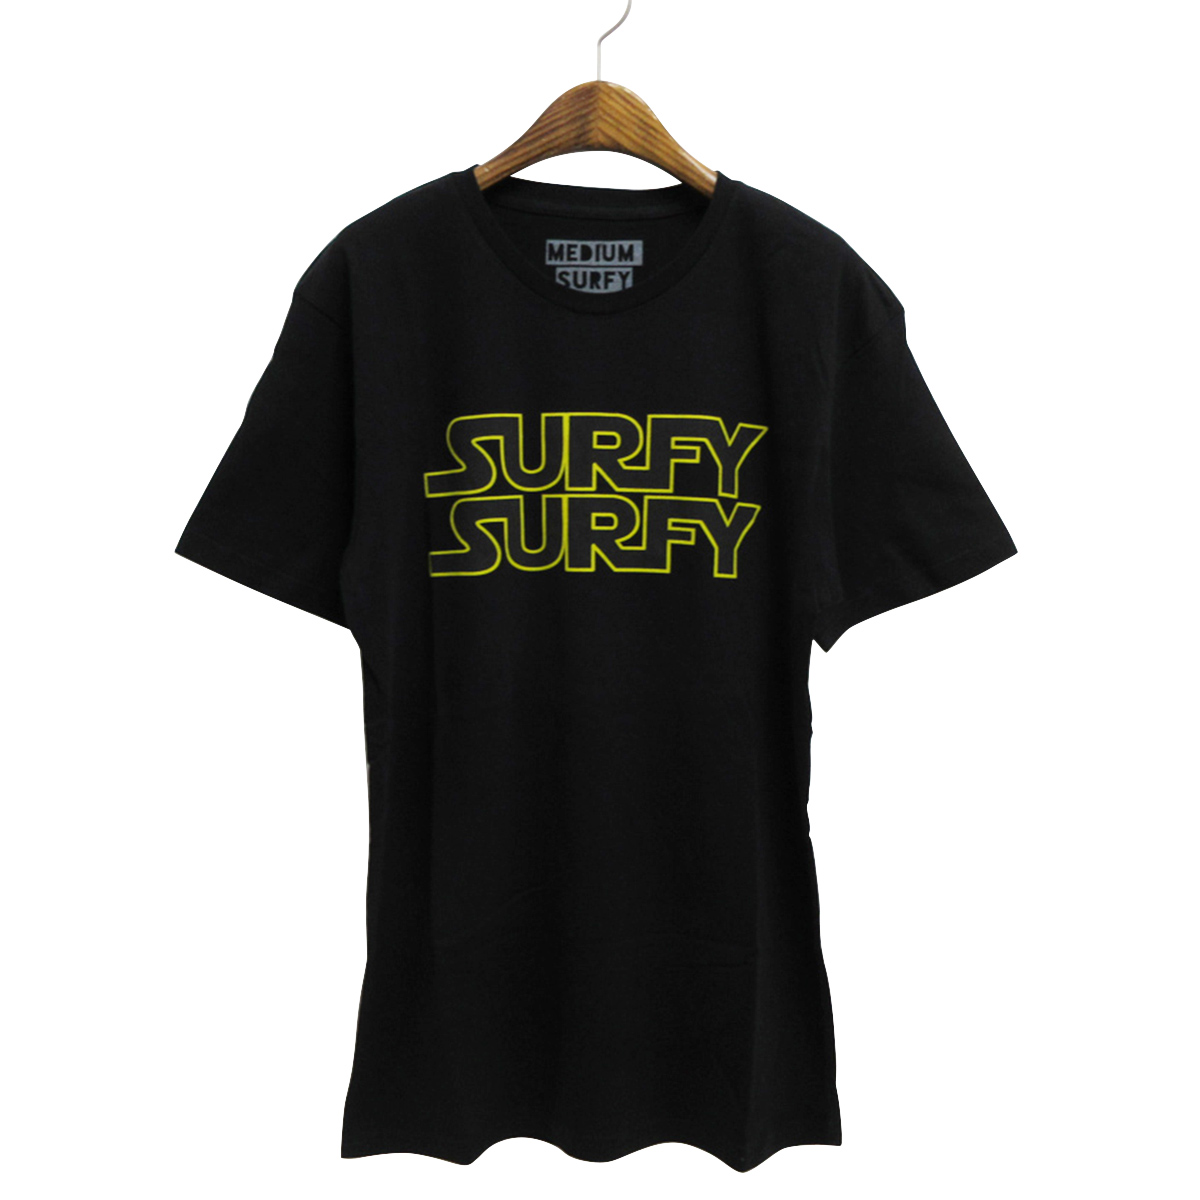 SURFY SURFY：SURFY WARS TEE